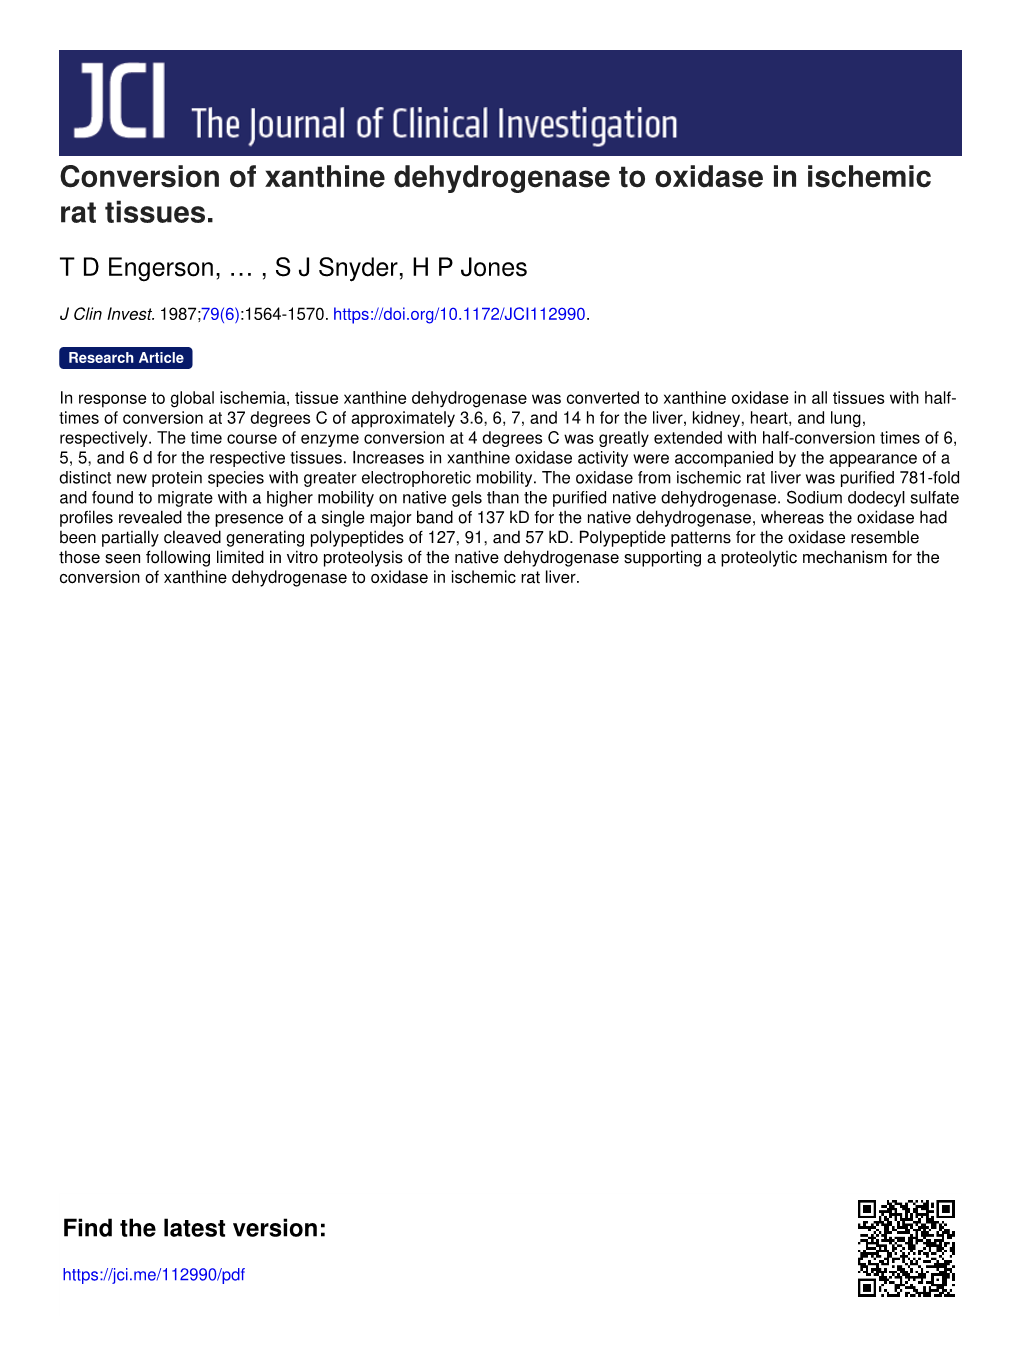 Conversion of Xanthine Dehydrogenase to Oxidase in Ischemic Rat Tissues